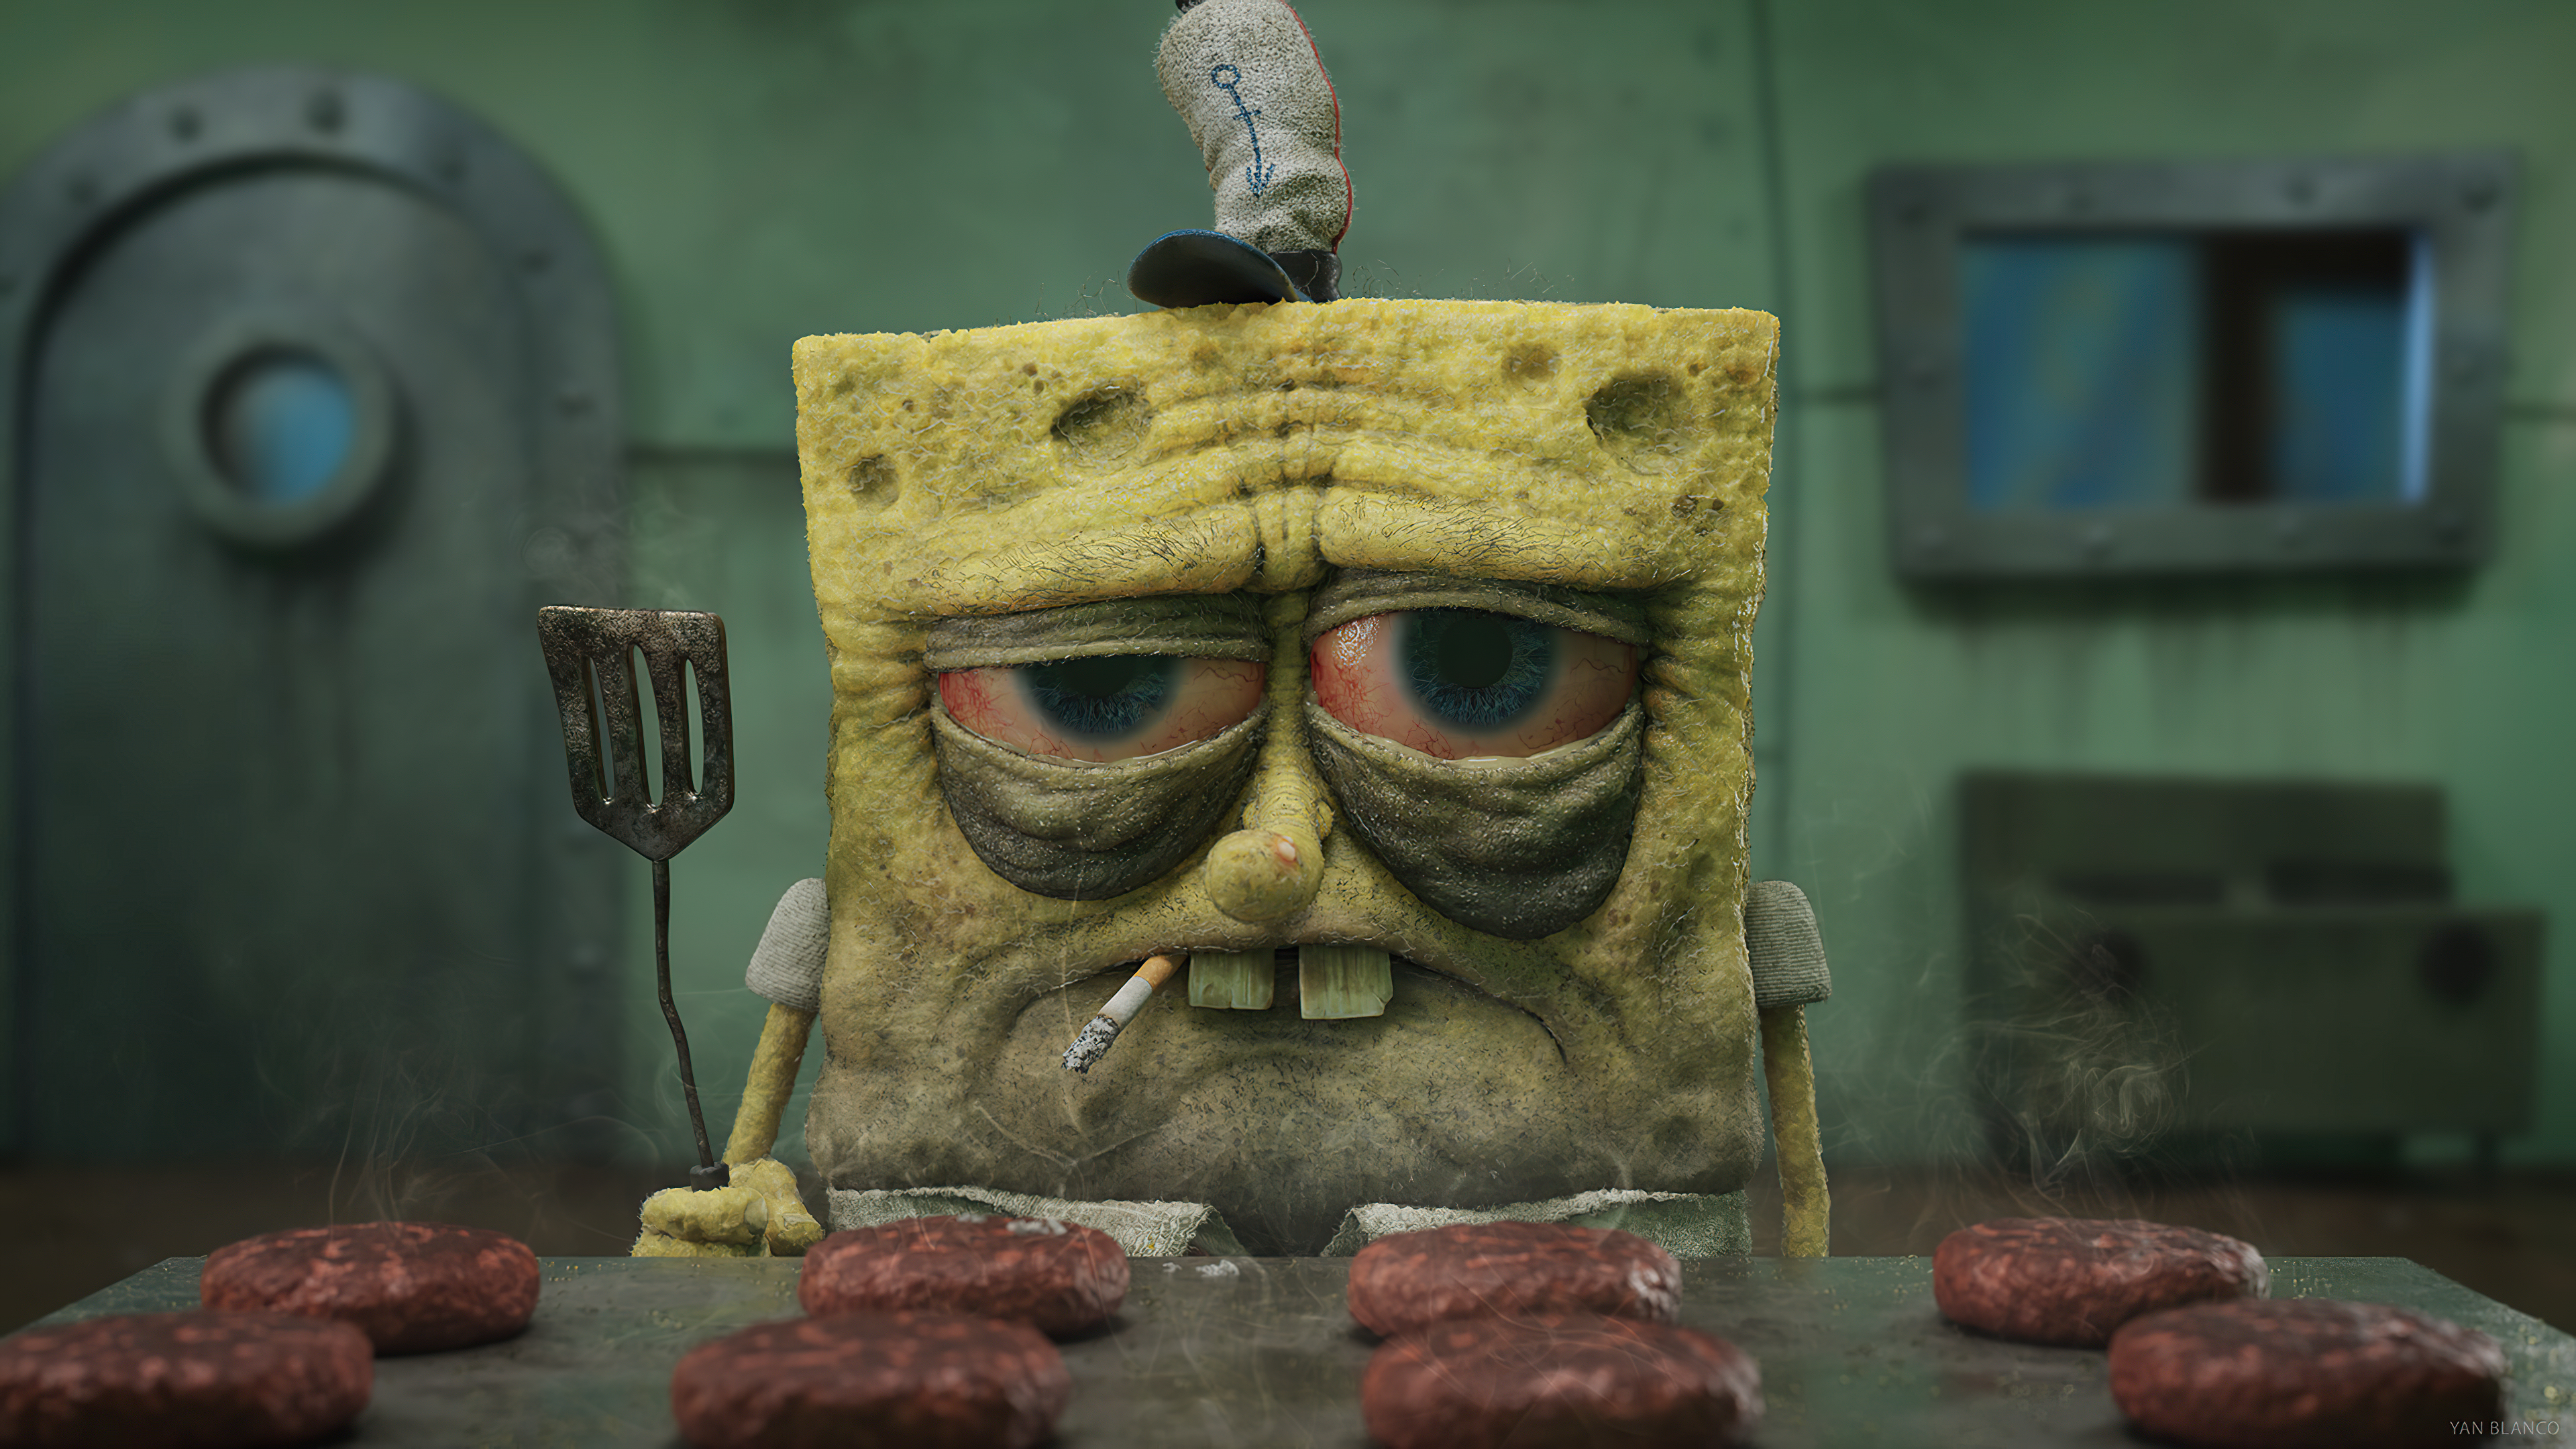 Spongebob Cooking Time, HD Cartoons, 4k Wallpapers, Image, Backgrounds, Pho...